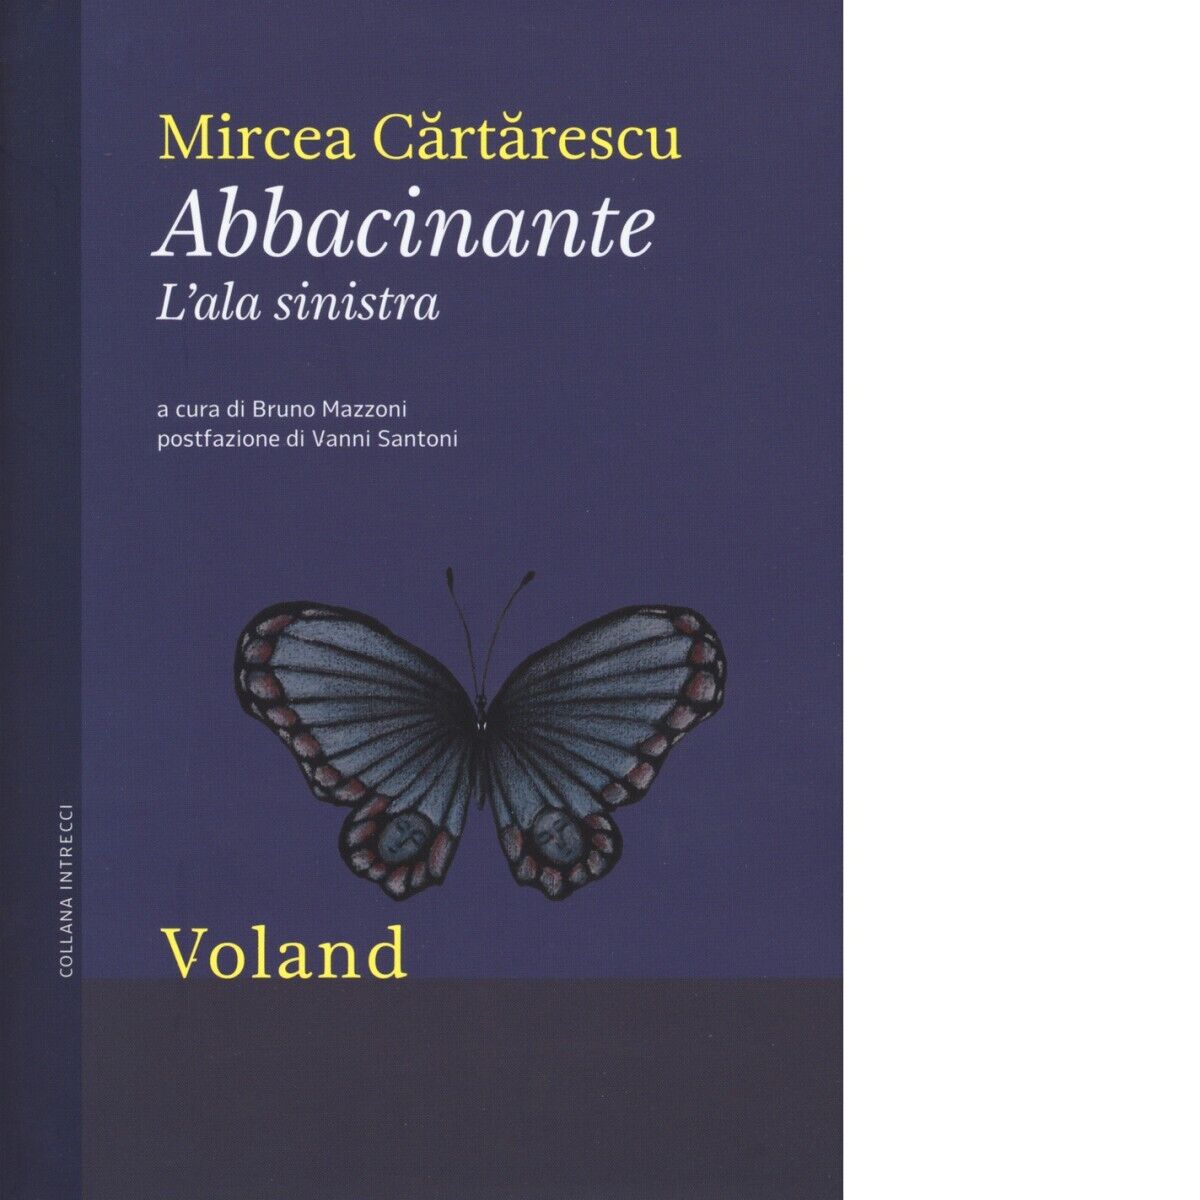 Abbacinante. L'ala sinistra di Mircea Cartarescu, 2018, Voland